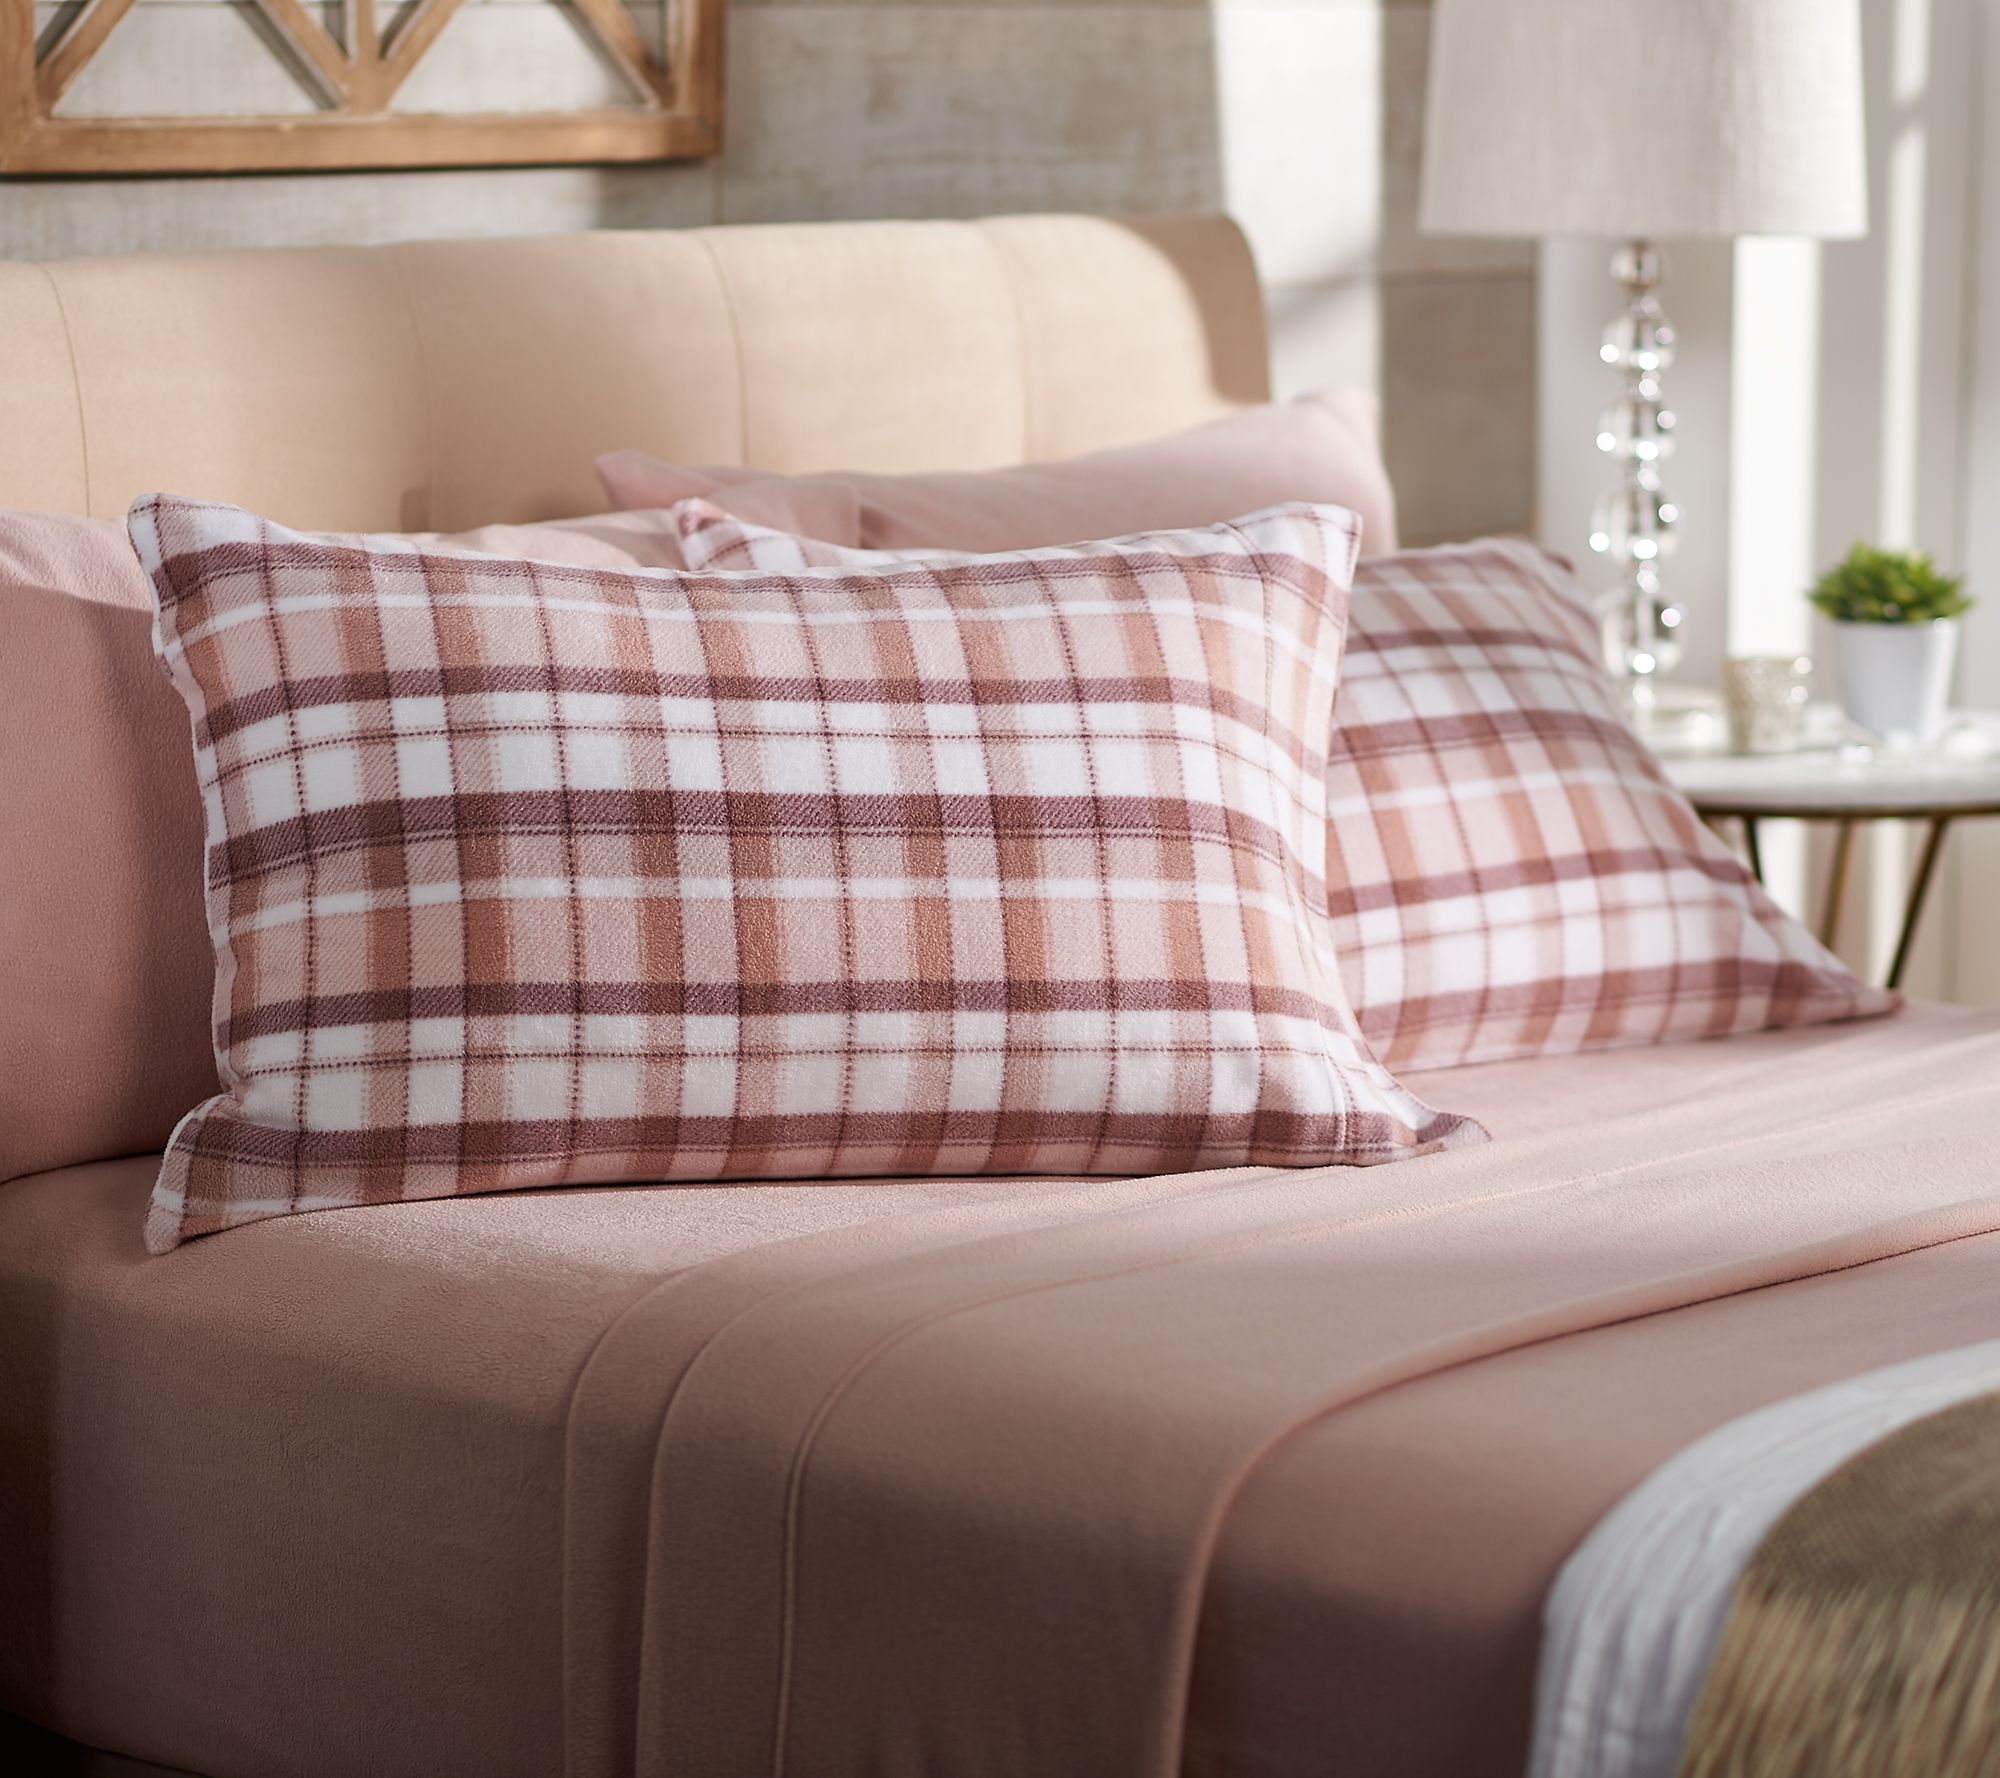 NorthCrest Home Fleece Sheet Set Full Size 85"x94" Soft Warm Bed Sheets RP $80 